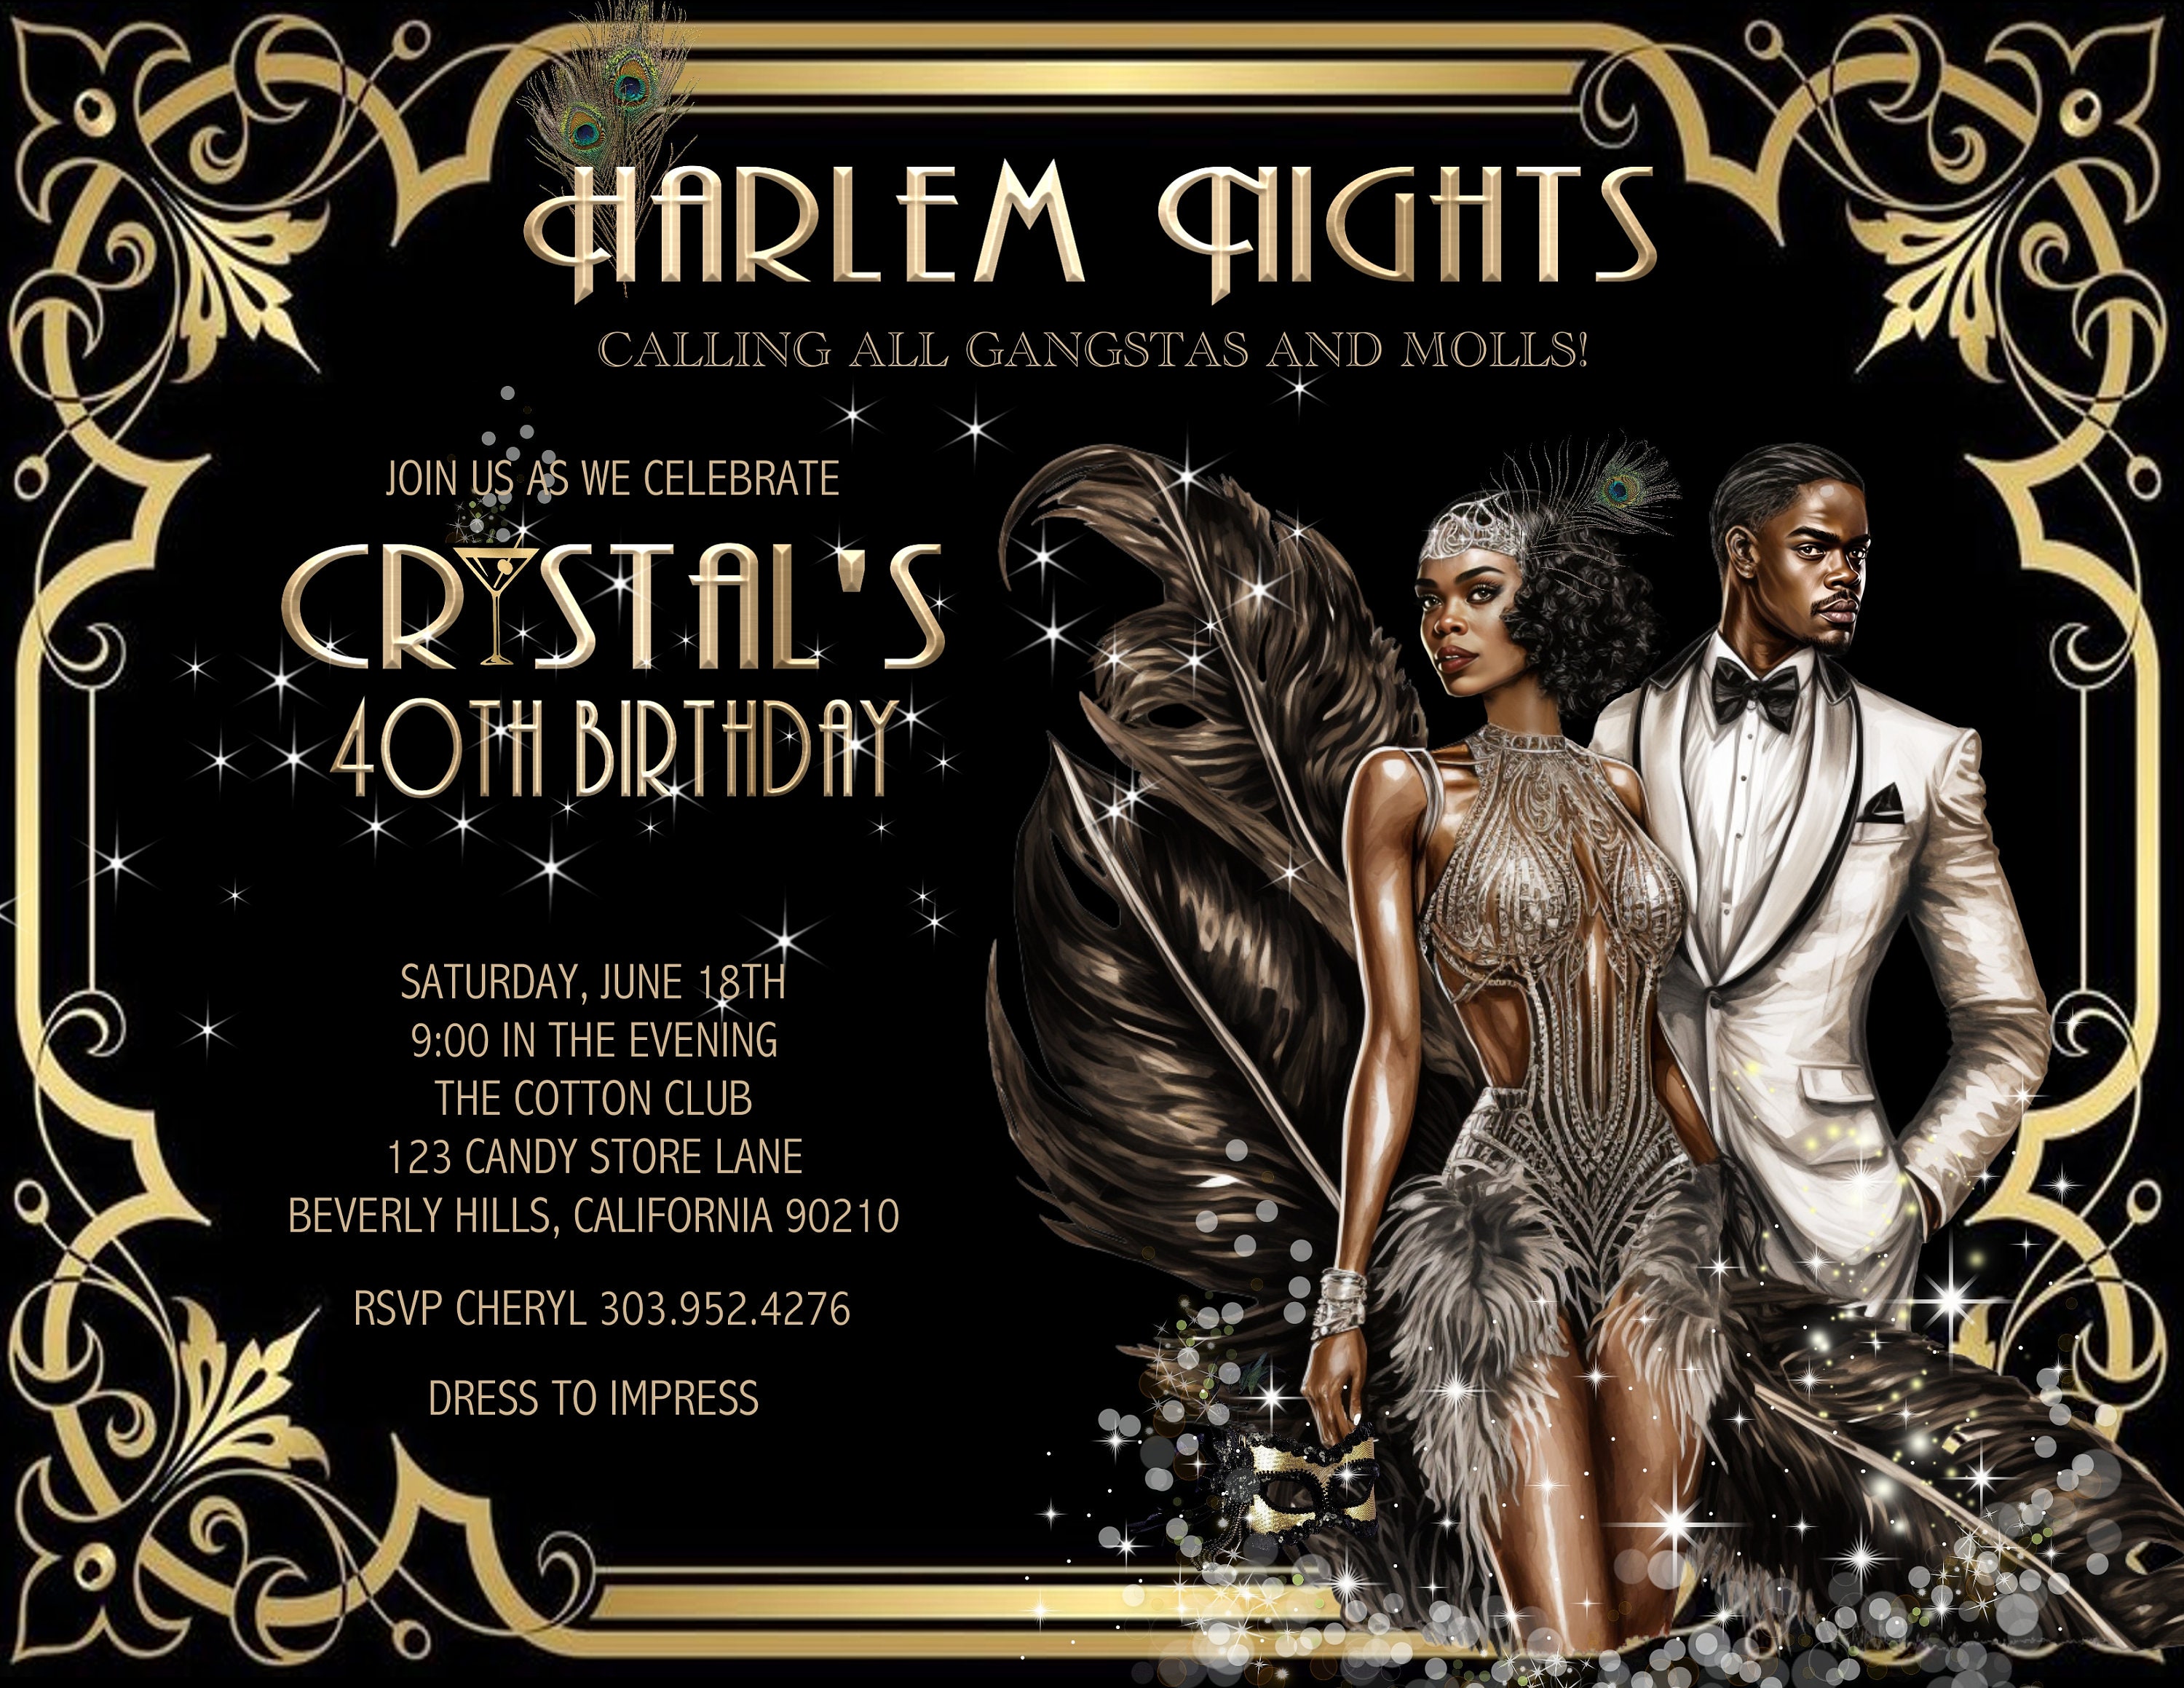 15 FABULOUS Harlem Nights Feathers Couple Birthday / Event